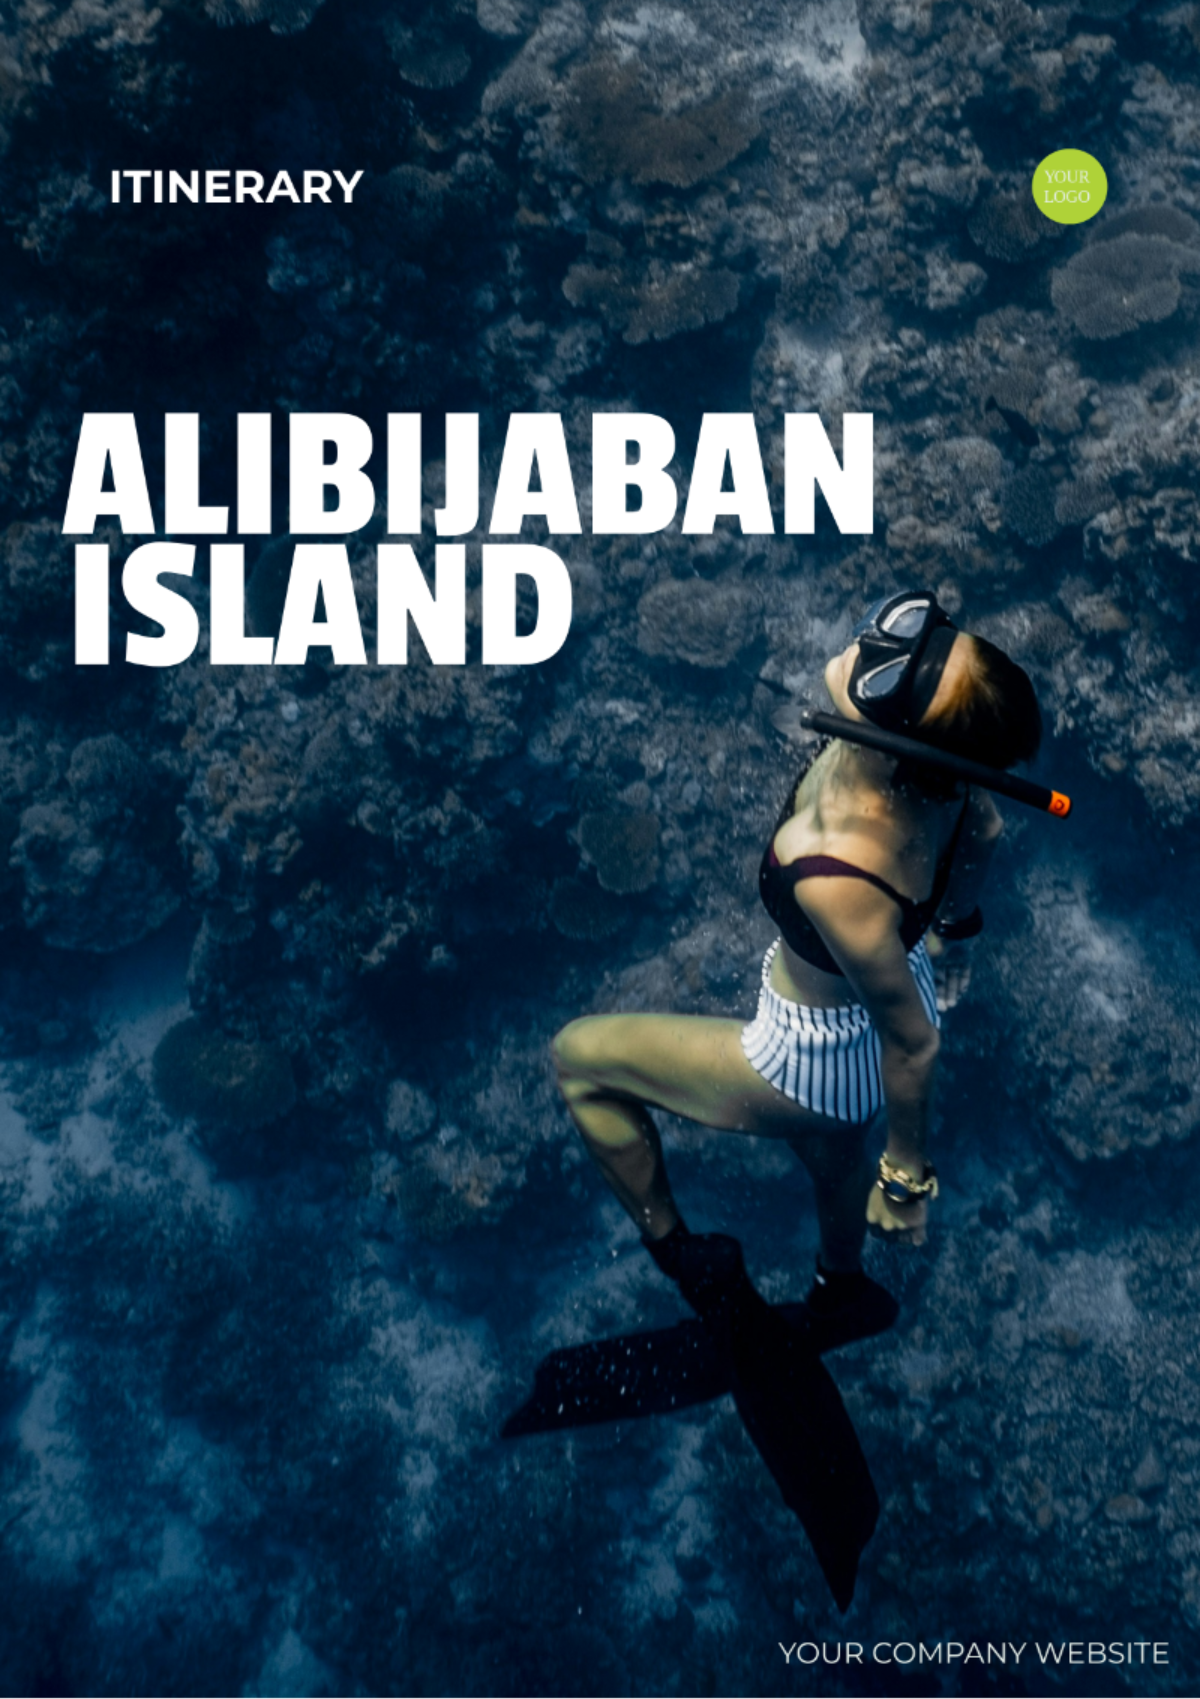 Free Alibijaban Island Itinerary Template